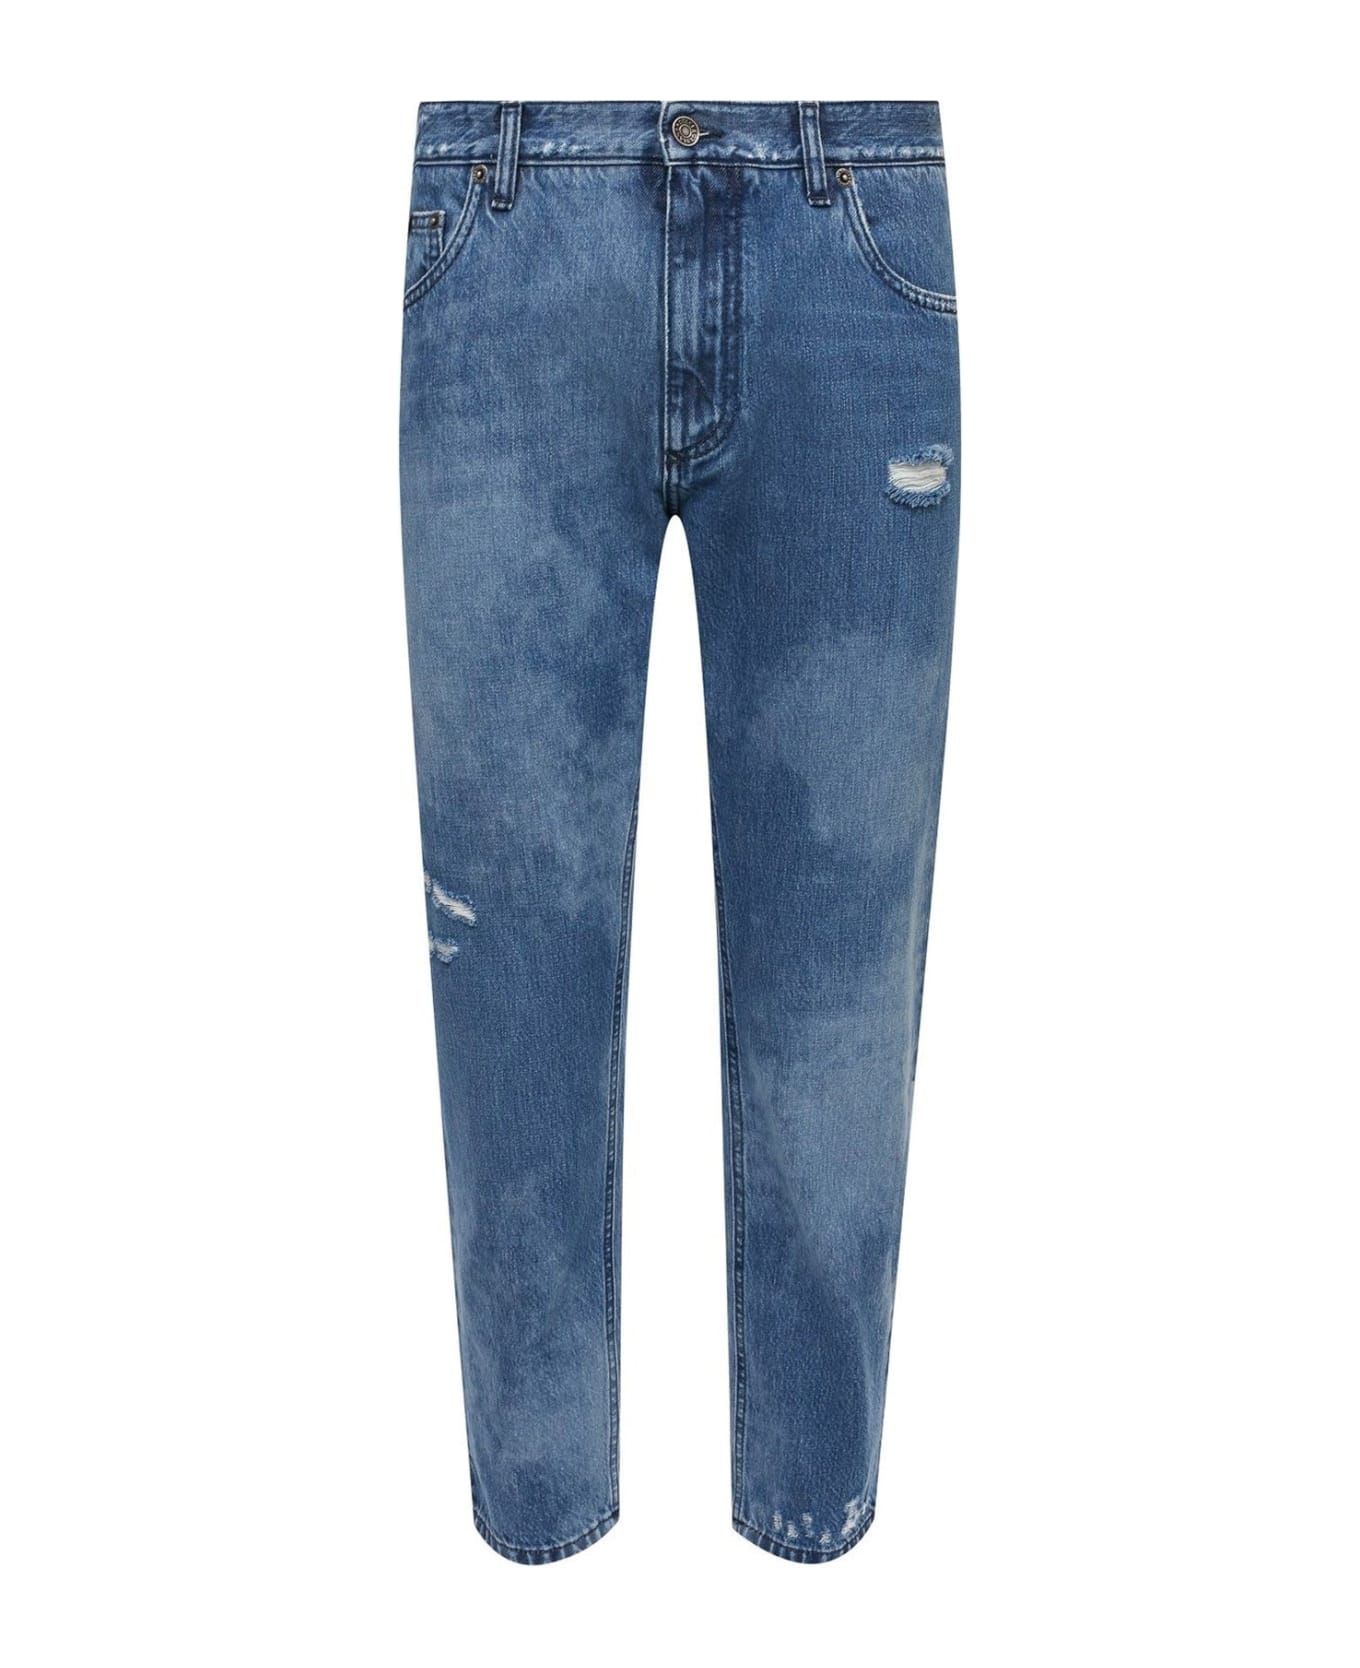 Dolce & Gabbana Denim Jeans - Blue